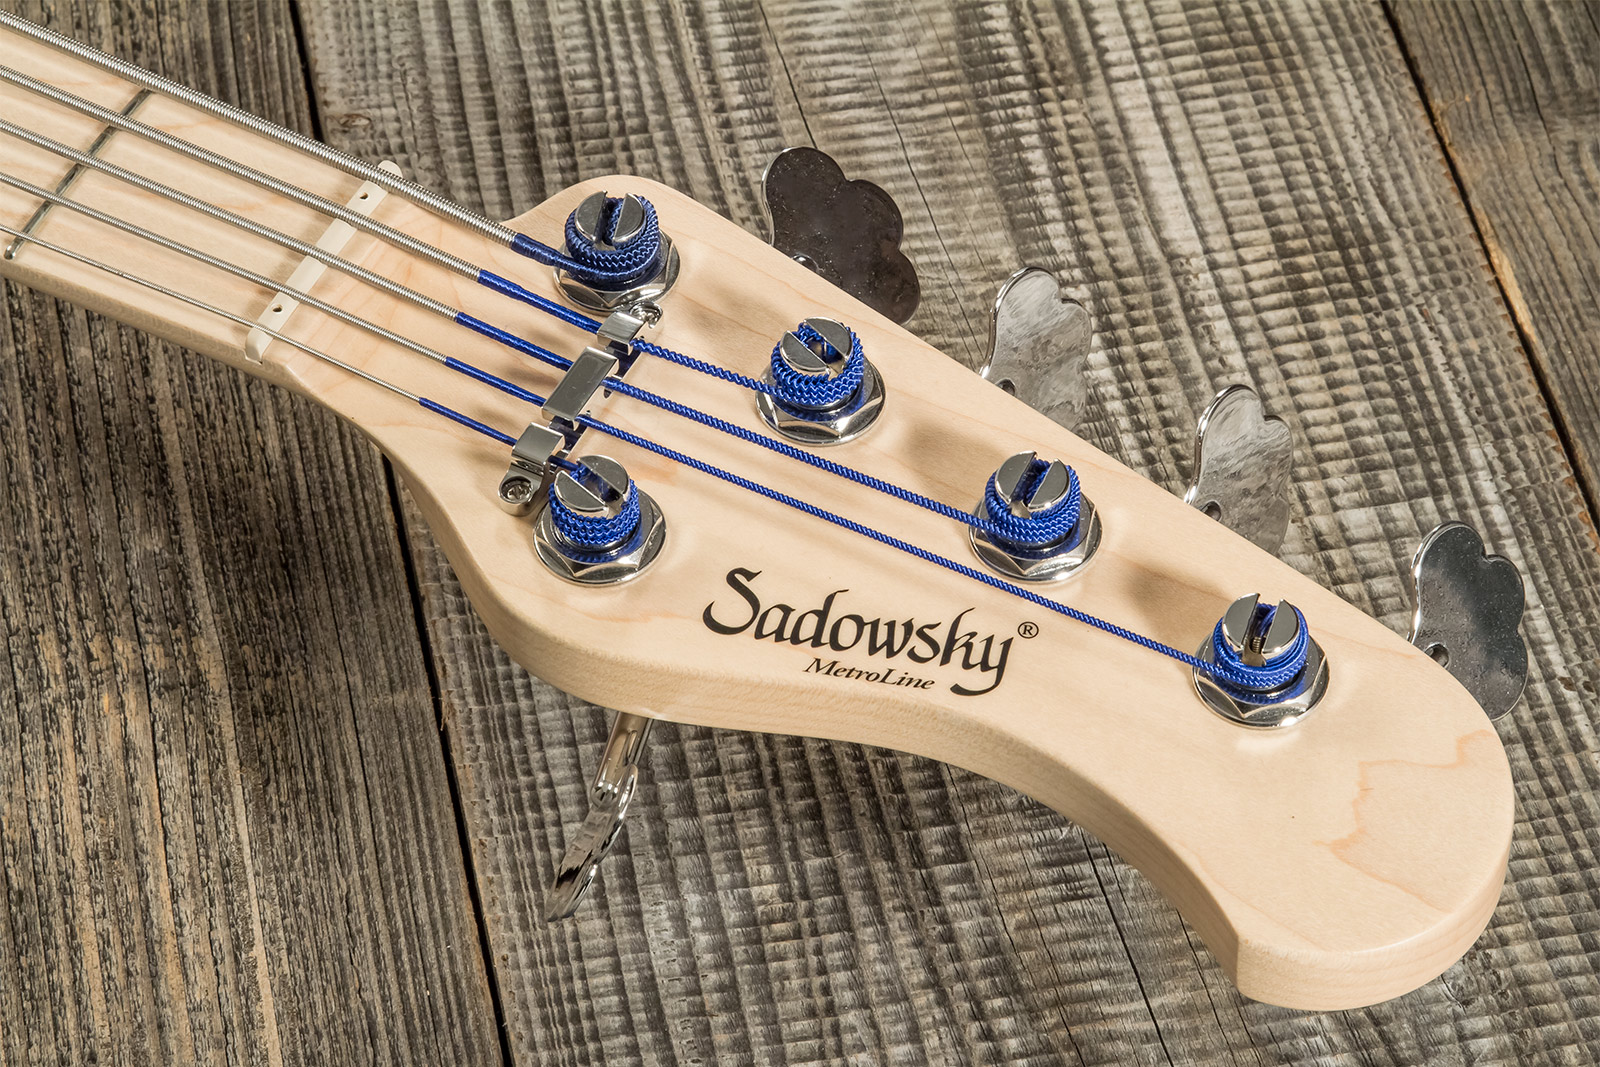 Sadowsky Single Cut Bass 24f Ash 5c Metroline All Active Mn - Satin Black Pearl - Solid body elektrische bas - Variation 7